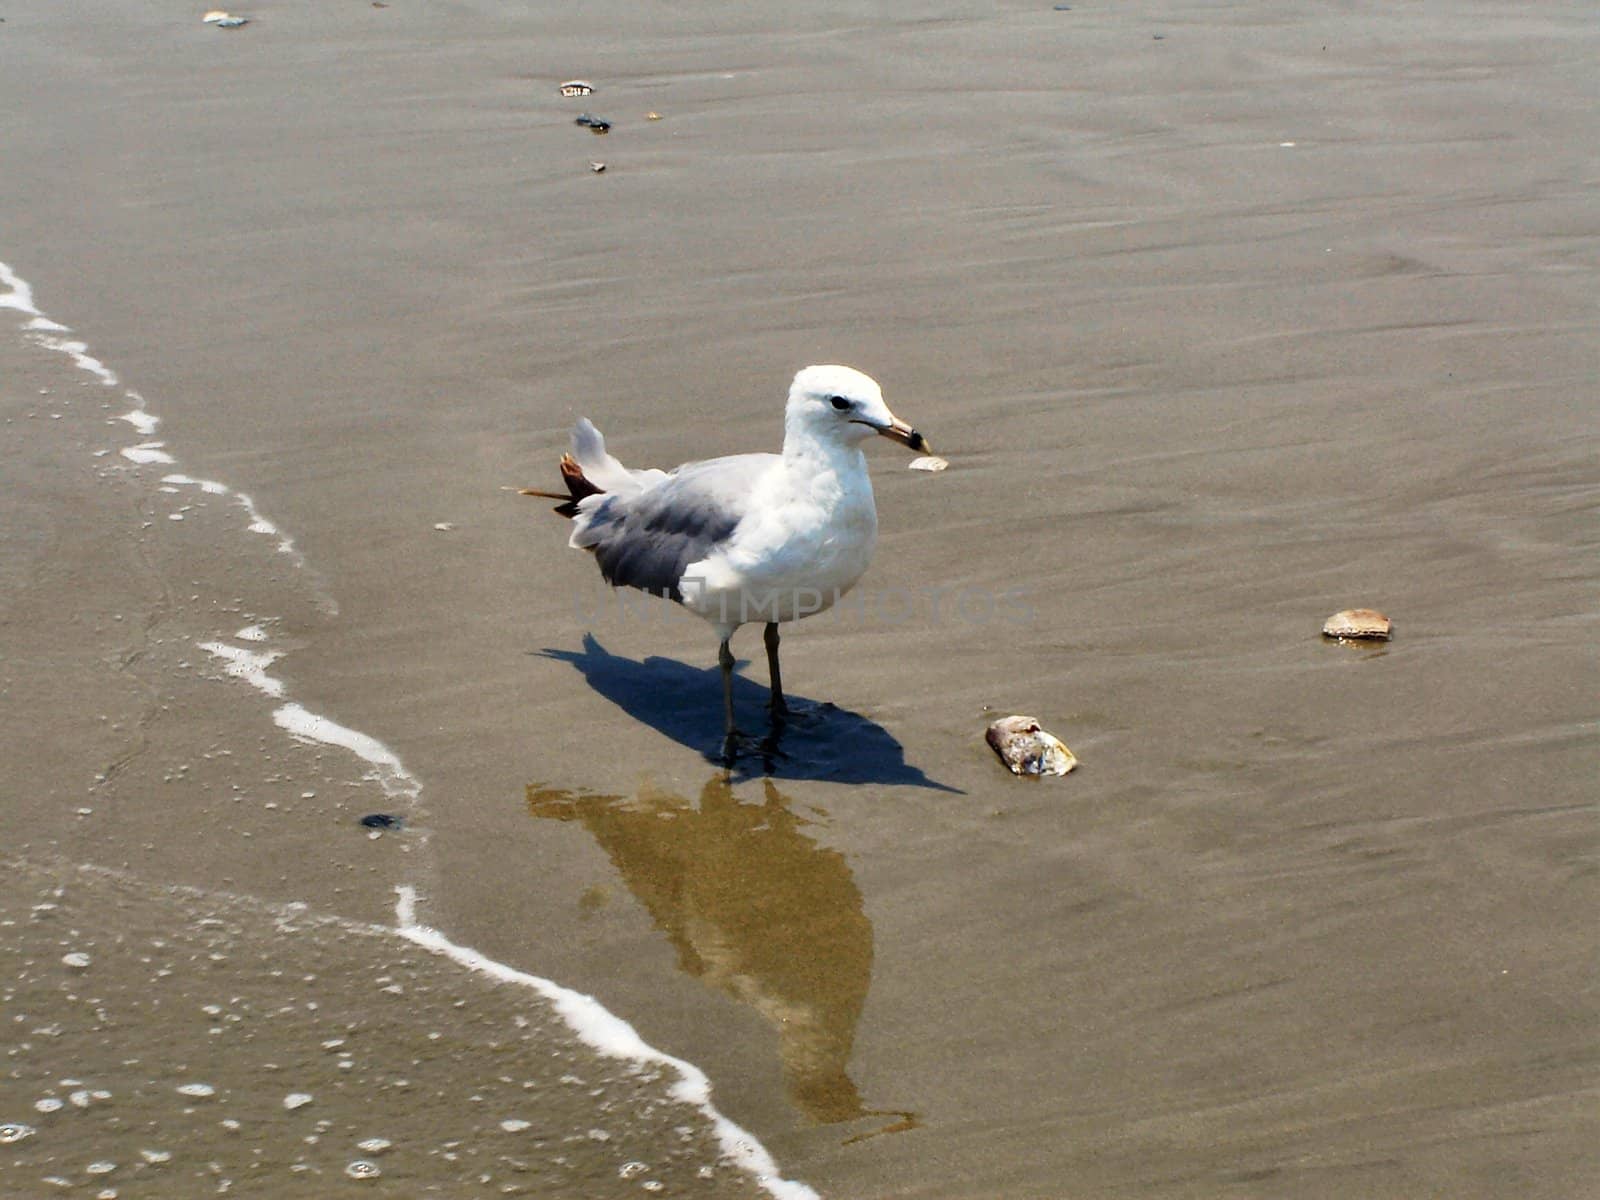 Bird on beach by RefocusPhoto